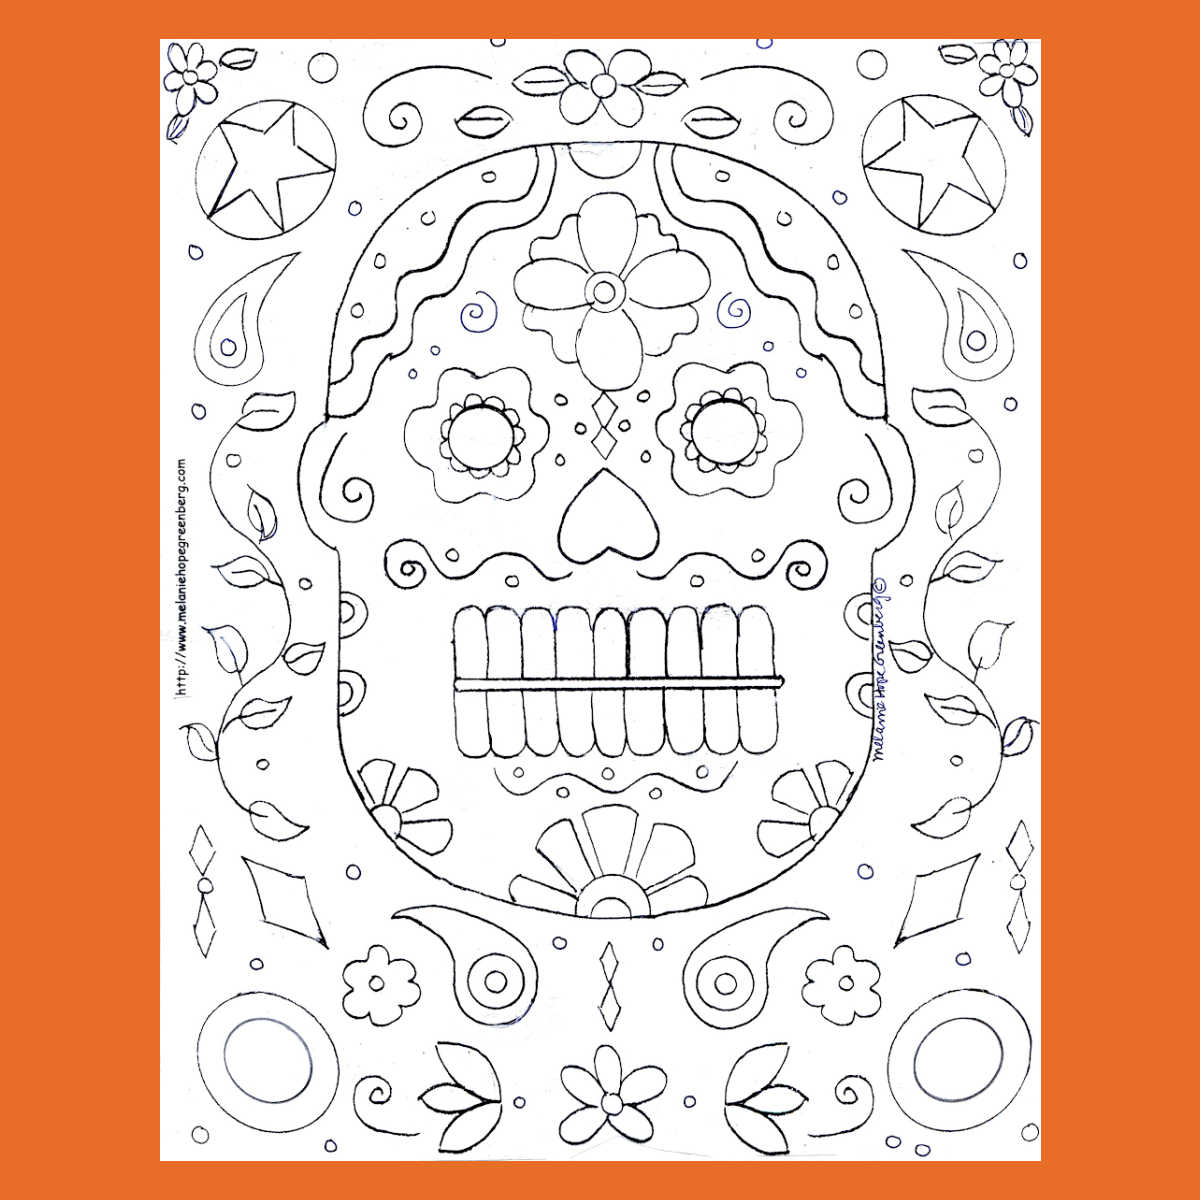 Dibujo para colorear de máscara de esqueleto de Halloween para imprimir gratis